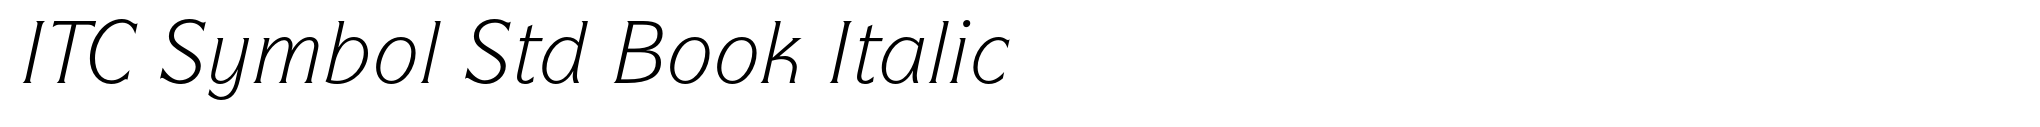 ITC Symbol Std Book Italic image